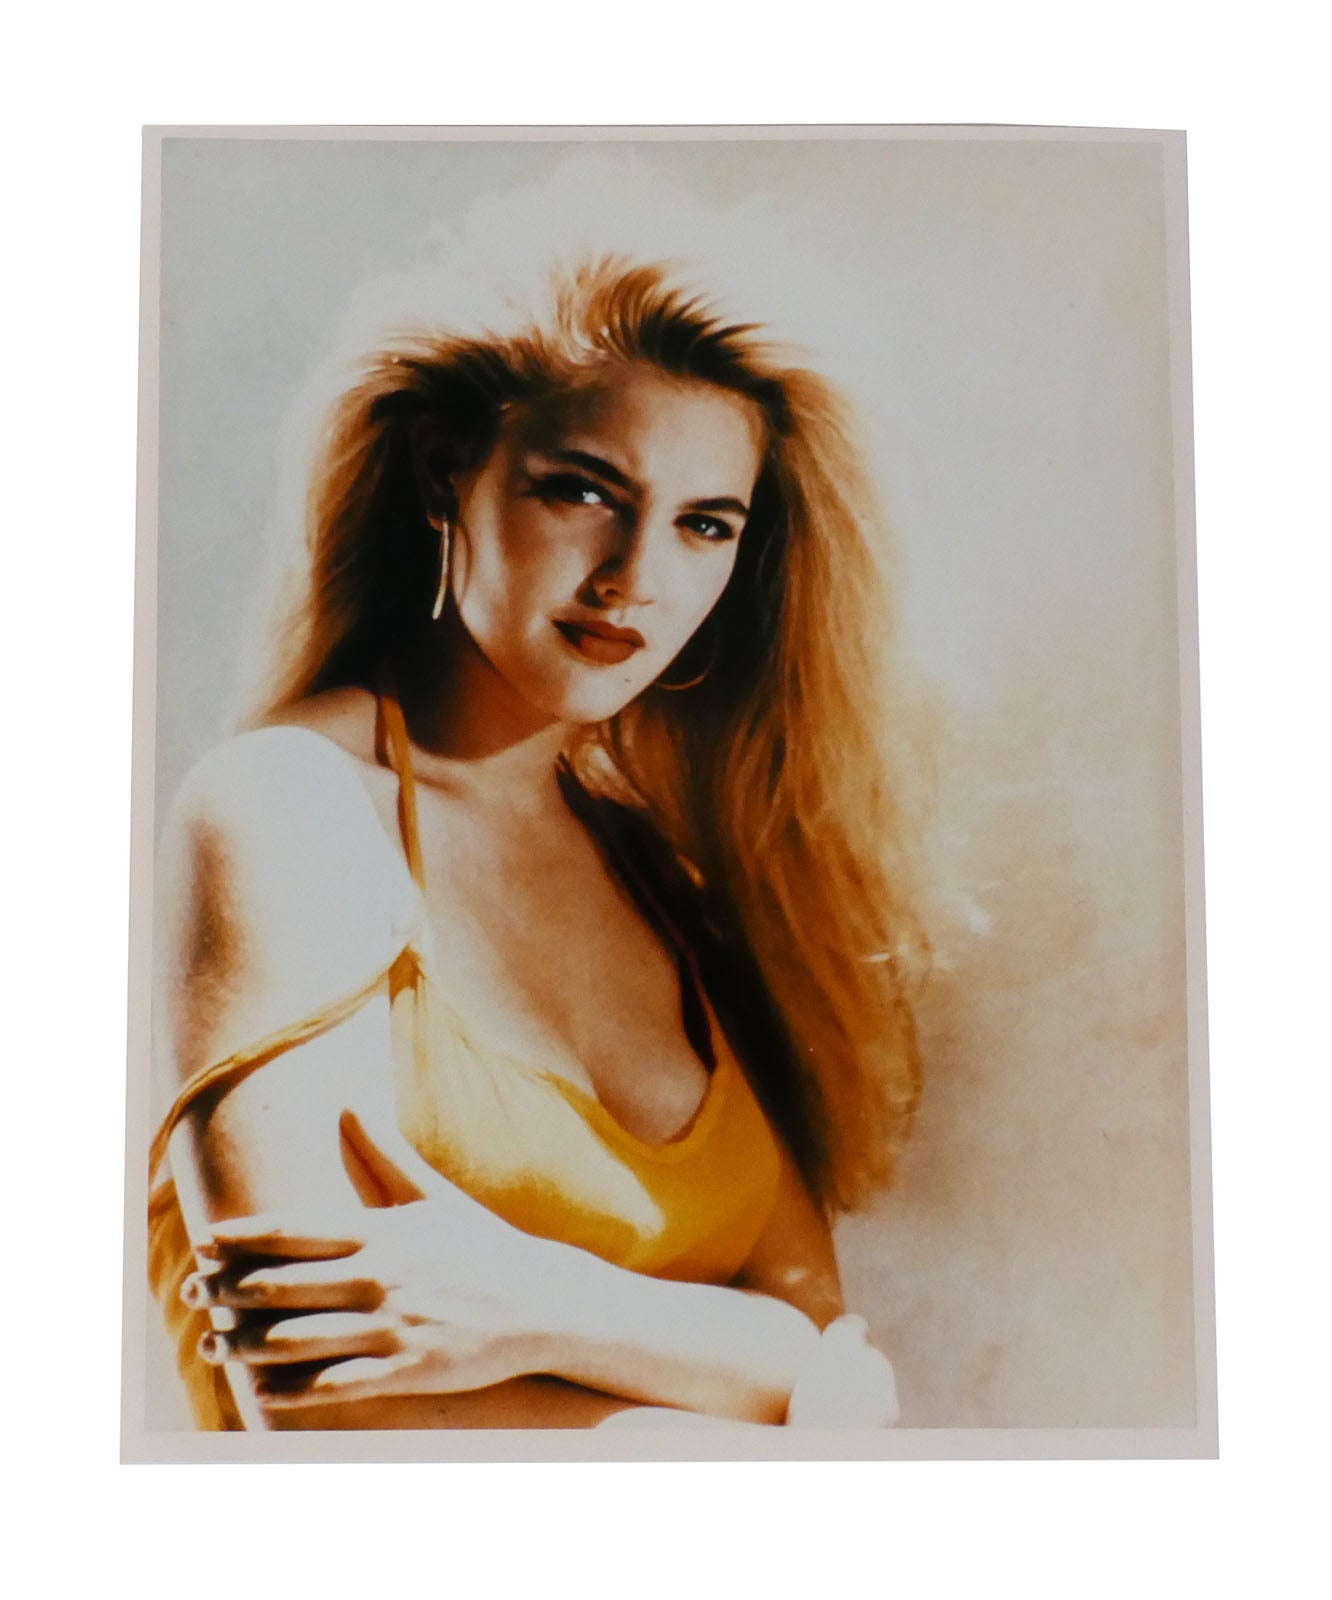 BEAUTIFUL Drew Barrymore (5) 4x6 Glossy Photos